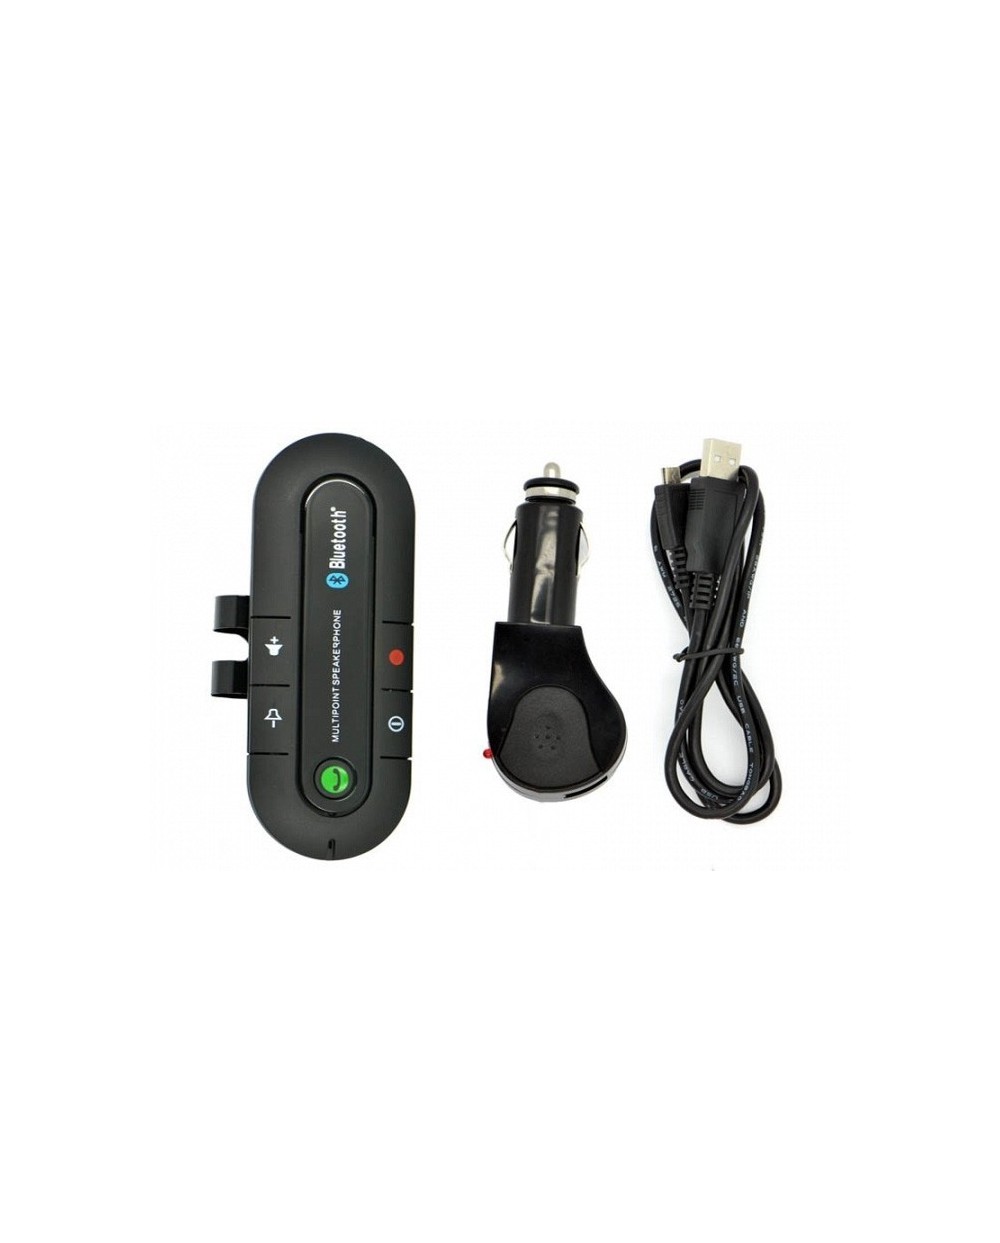 Bluetooth Αυτοκινήτου V4.0 με Ενσωματωμένη Μπαταρία - Car Kit Bluetooth